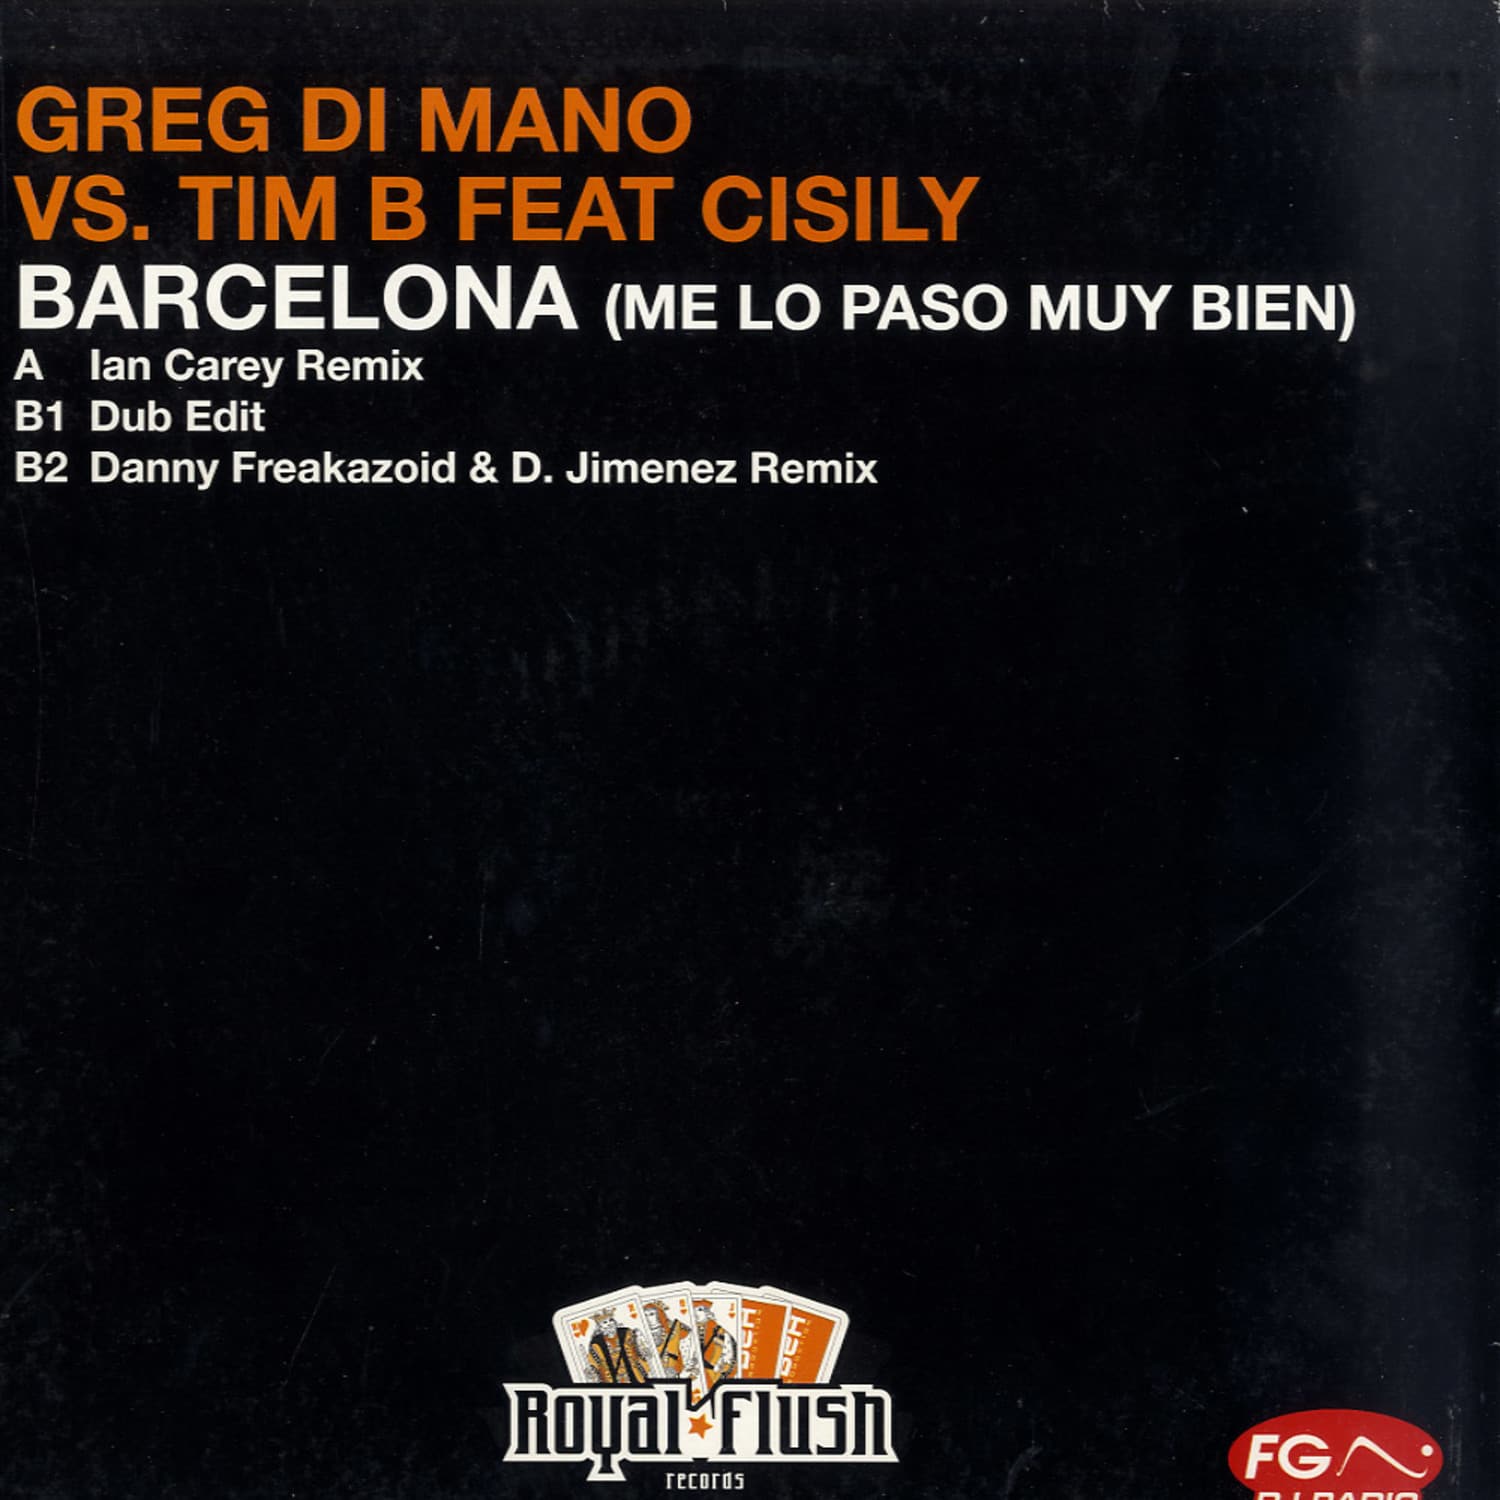 Greg Di Mano vs Tim B feat Cisily - BARCELONA